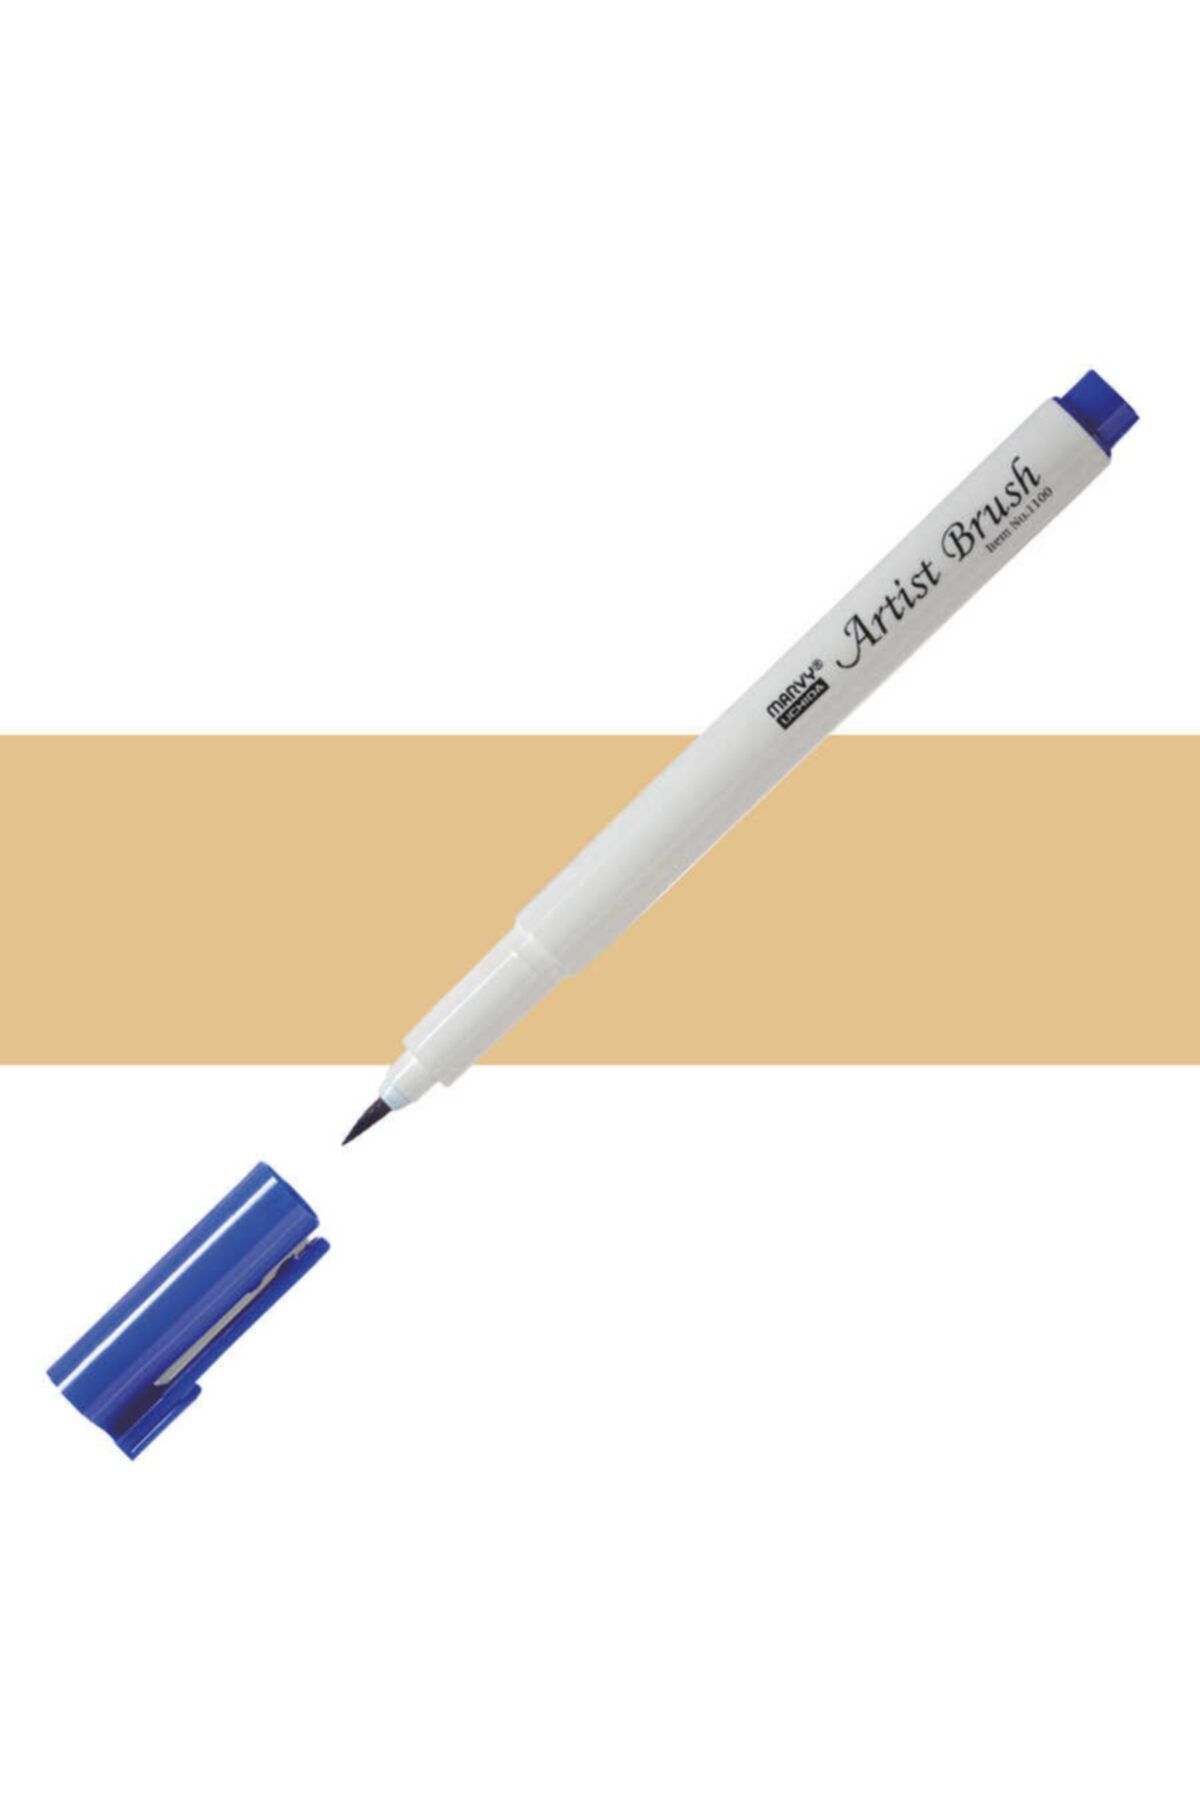 Marvy Brush Pen Fırça Kalem Beıge